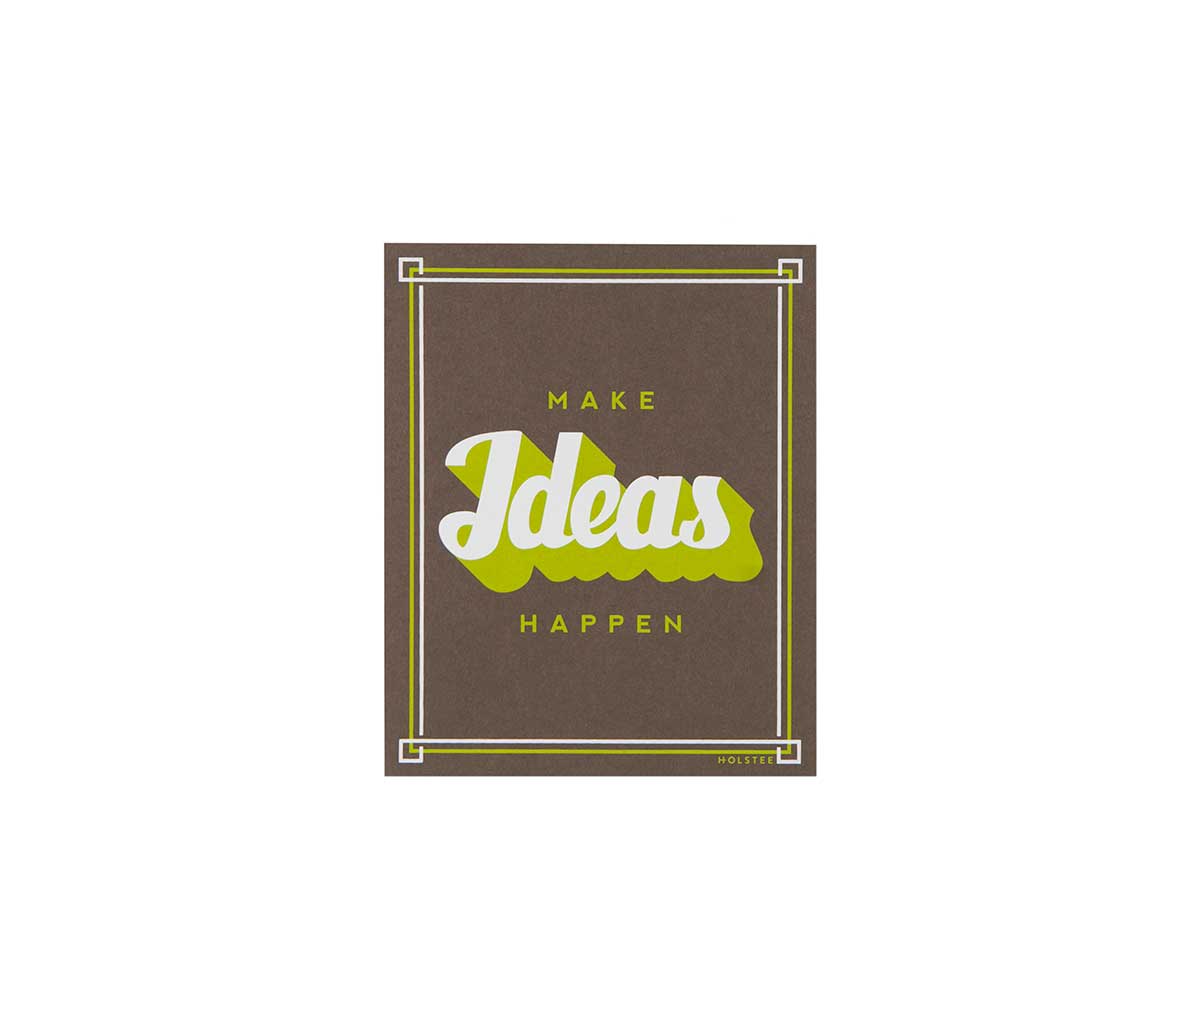 Impresión Make ideas happen 20x25 - Verde